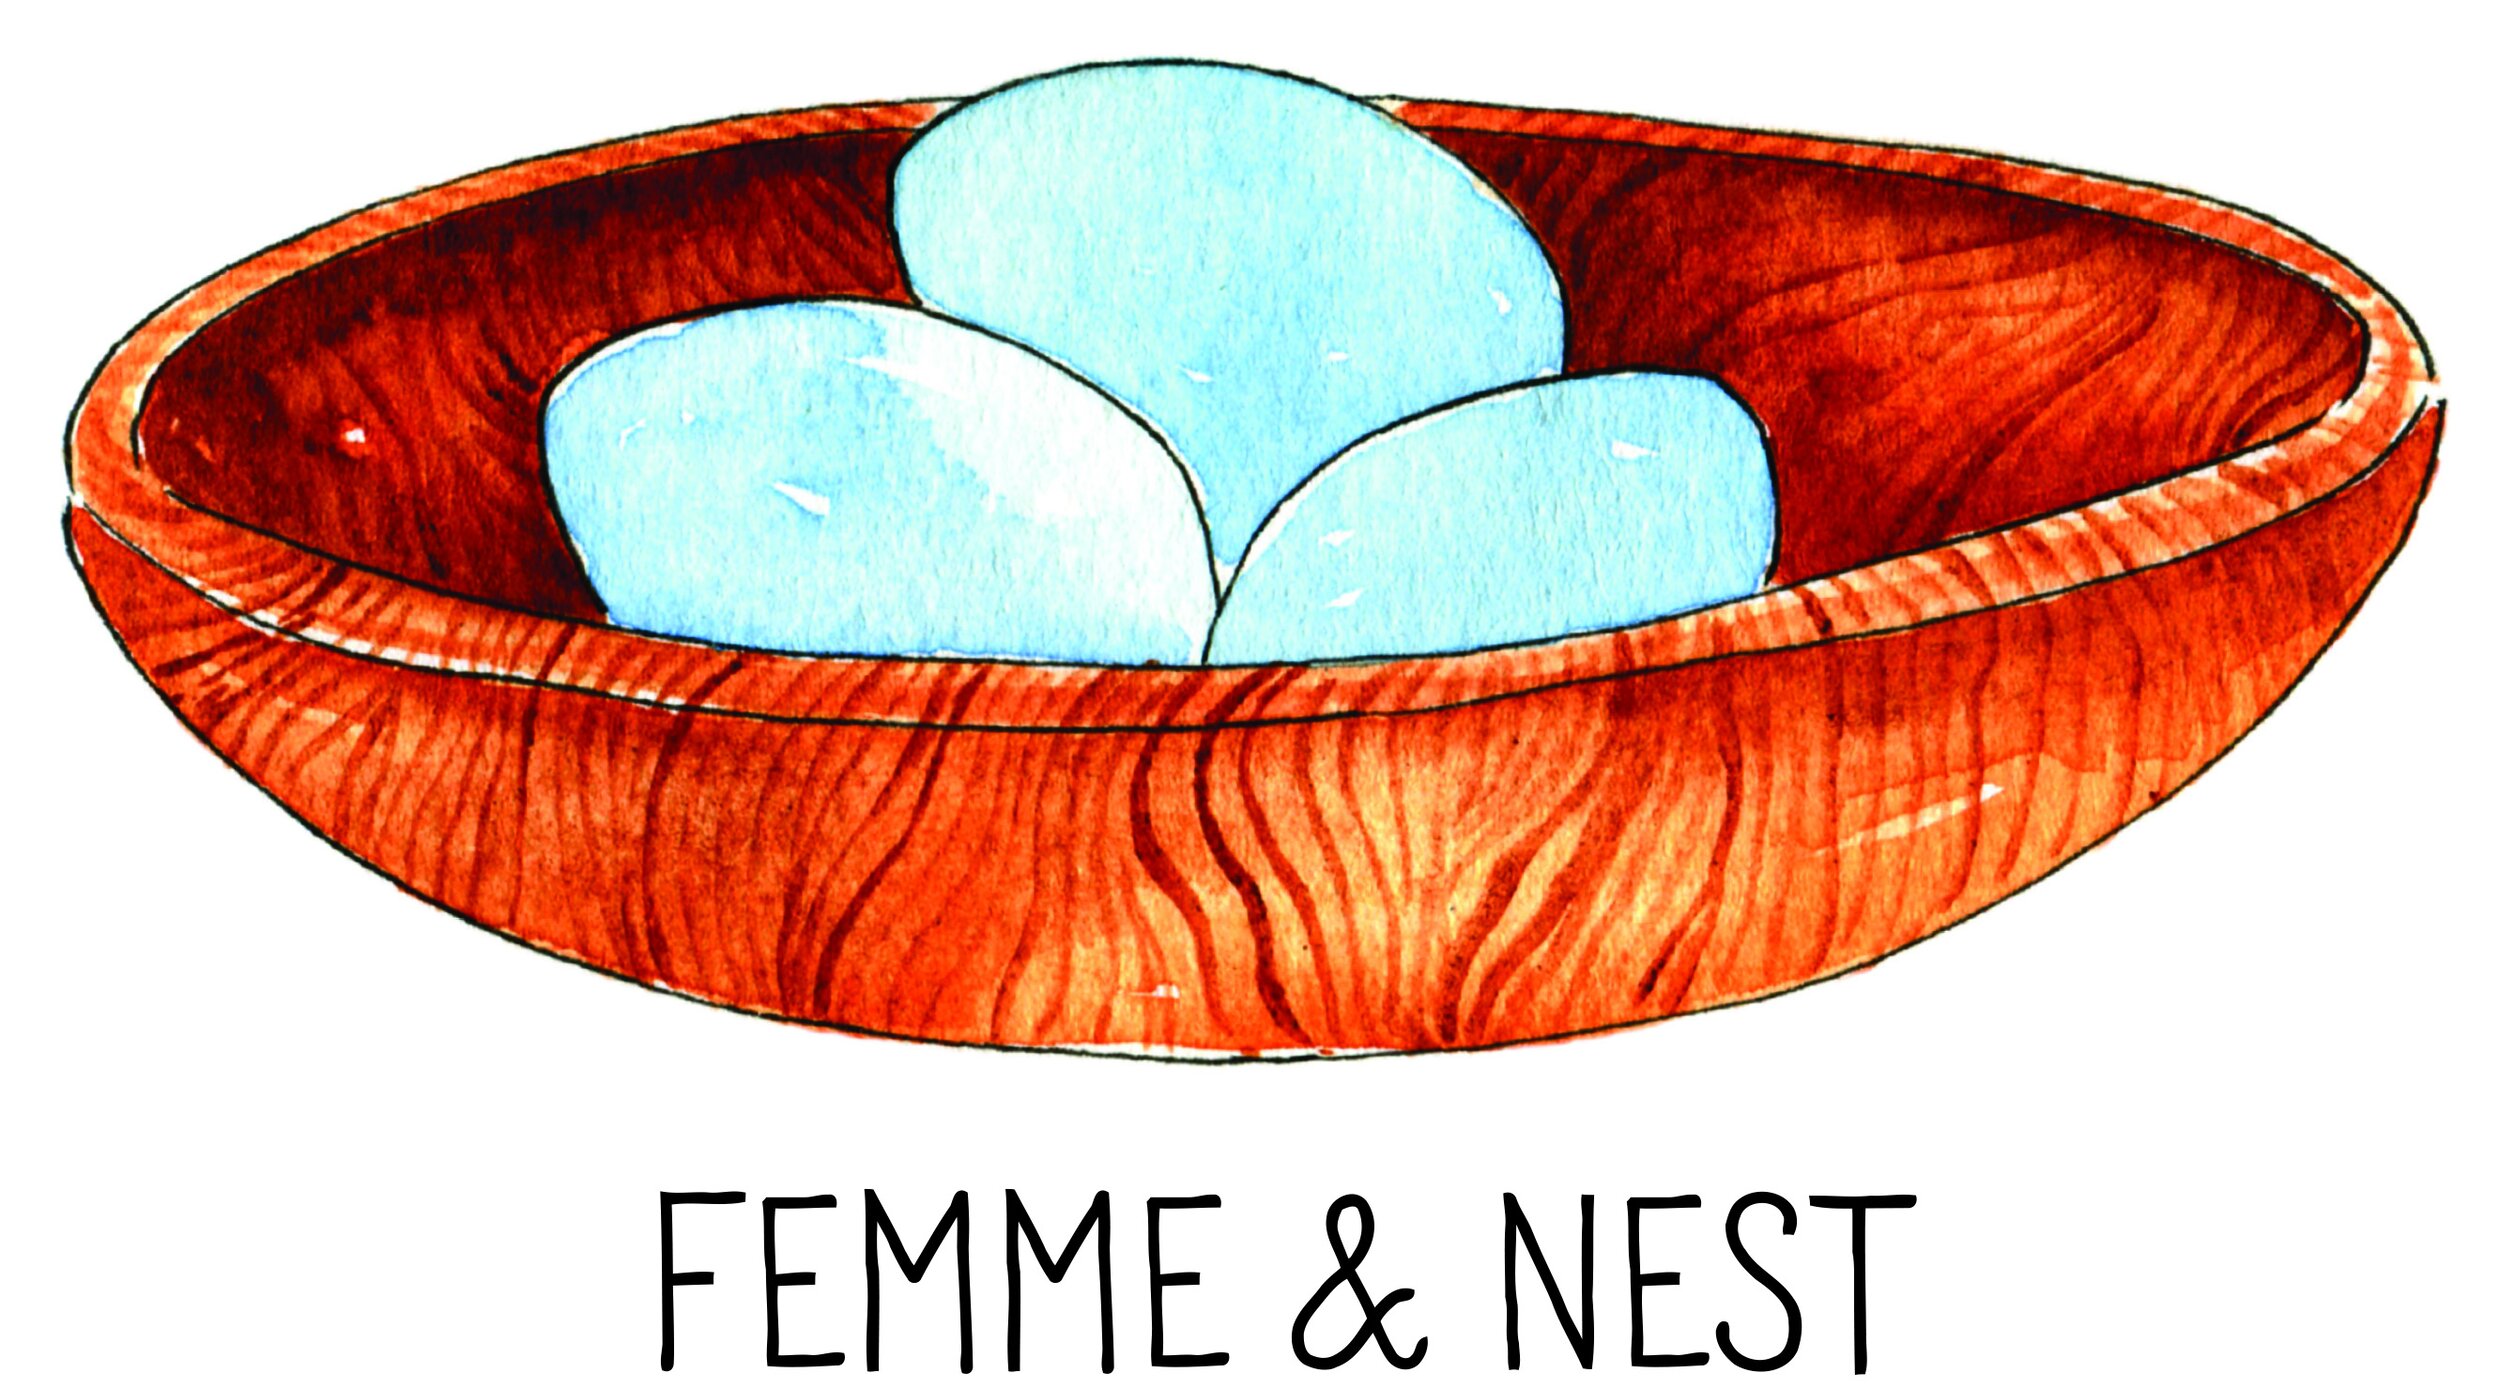 femme and nest logo final (1) copy.jpg